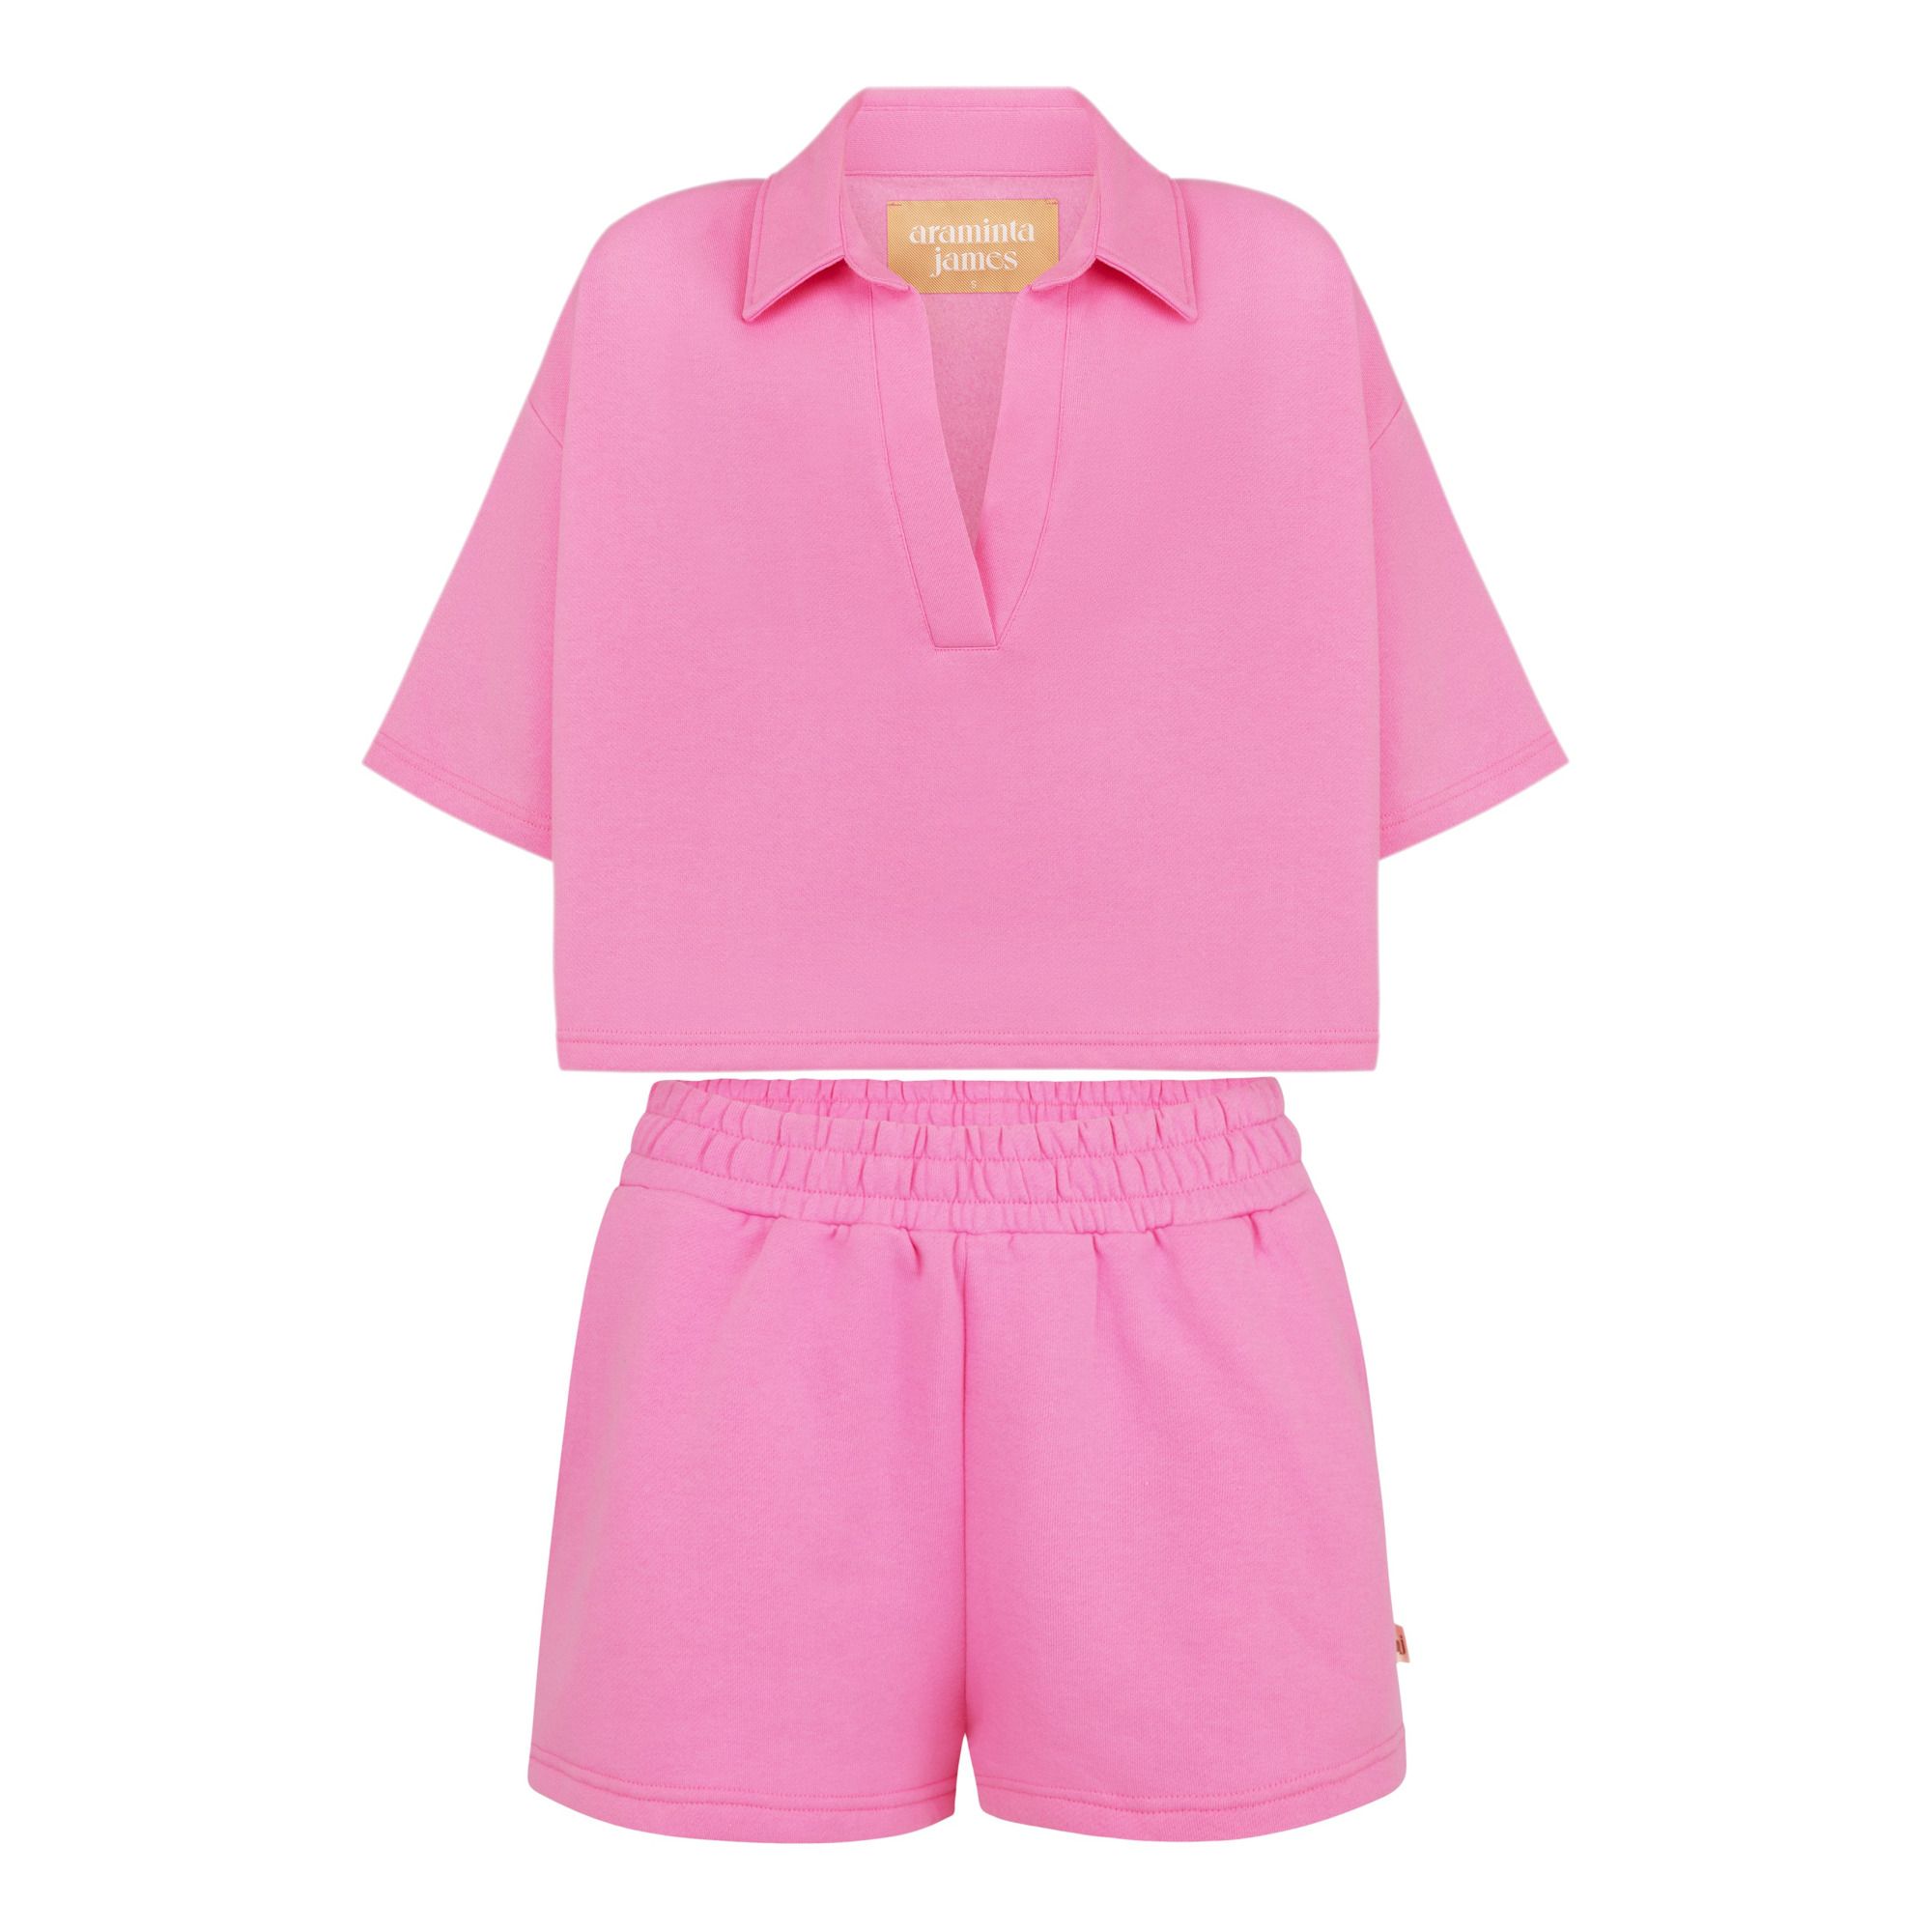 The Island Top & Bottom Set Pink Araminta James Fashion Adult | Smallable DE